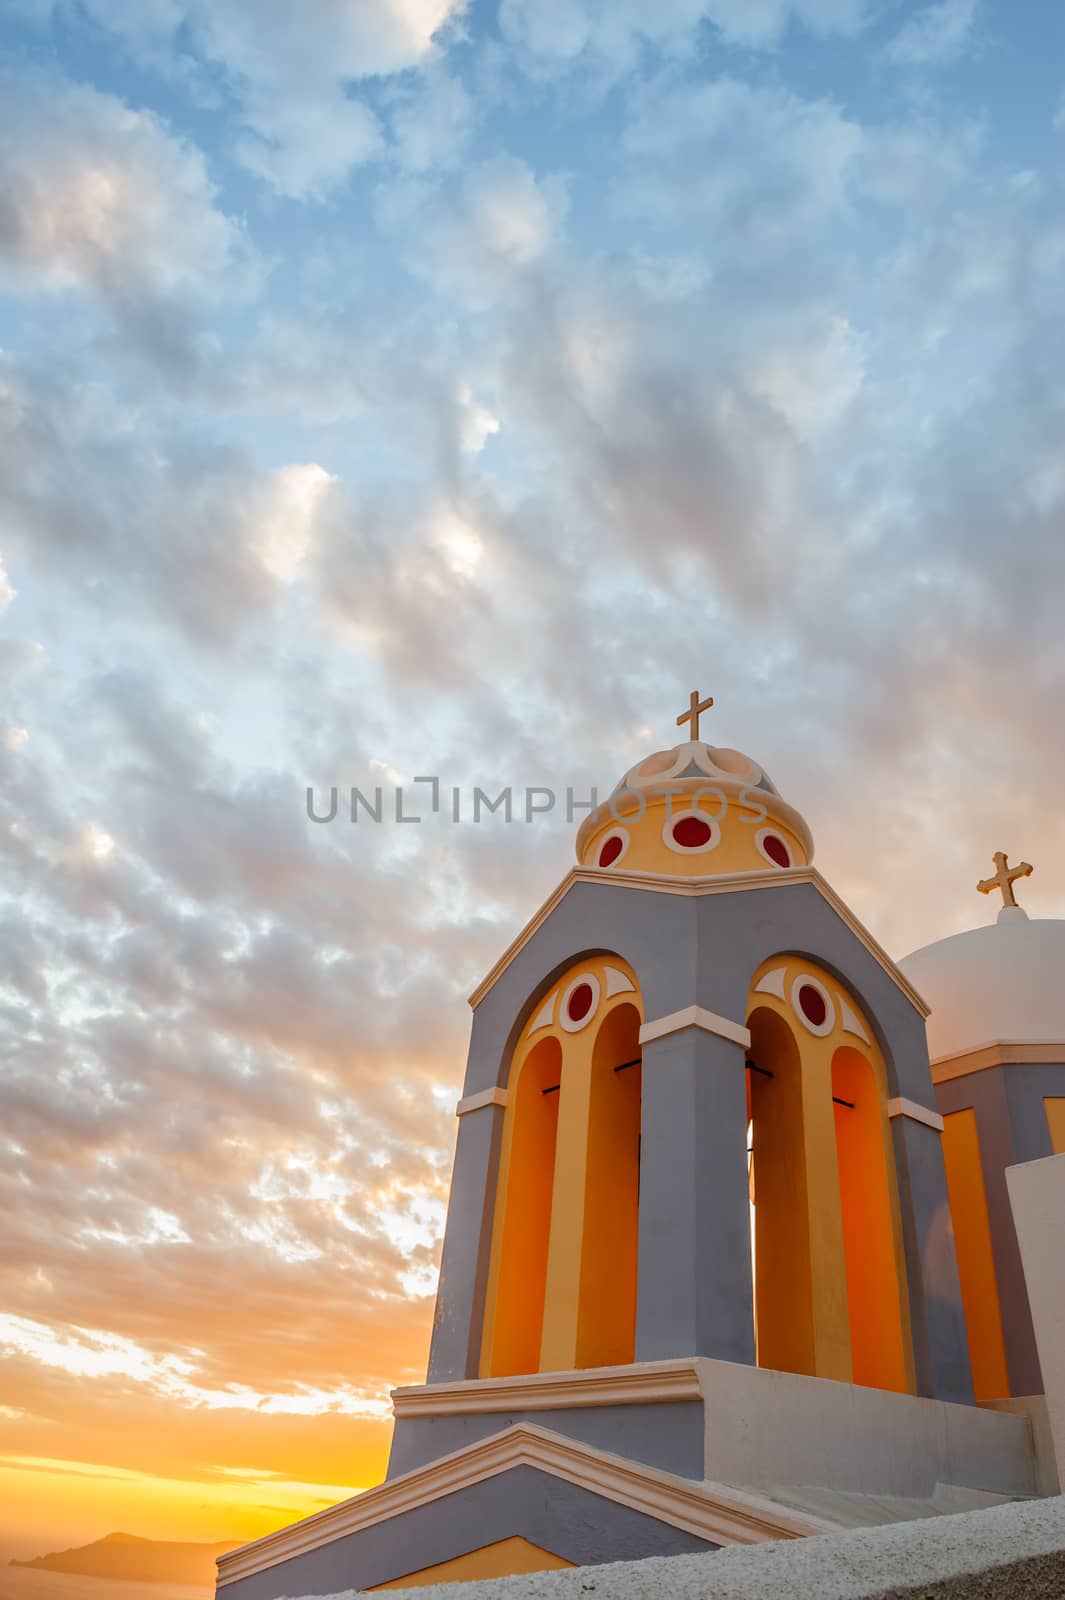 Orthodox church in rays of beautiful sunset. Fira, Santorini Greece. Copyspace